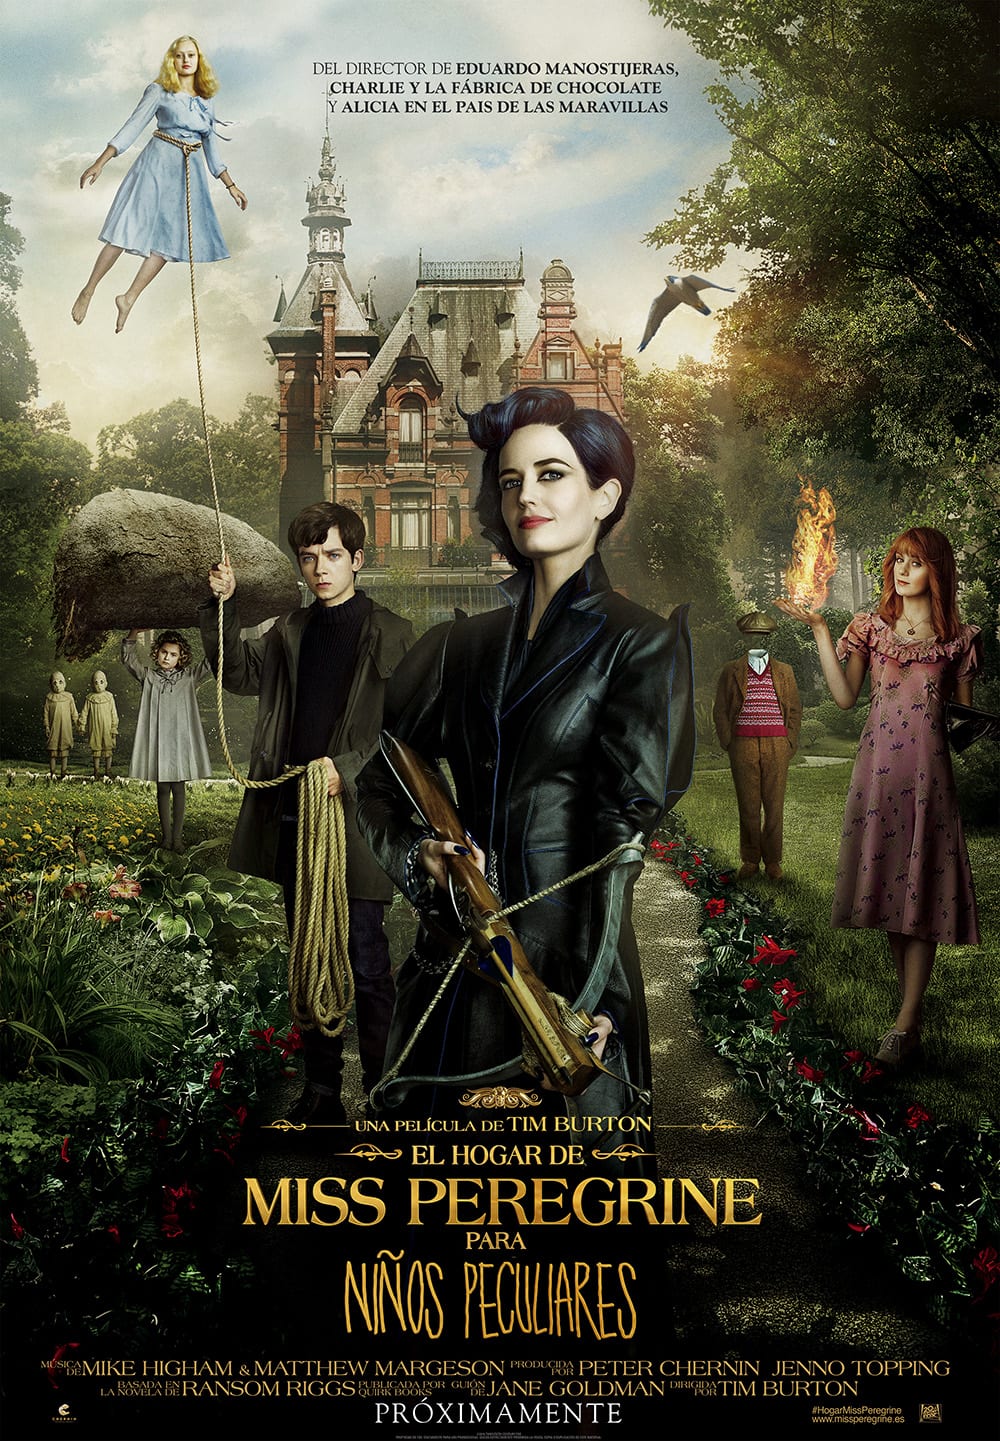 El hogar de Miss Peregrine – Tim Burton